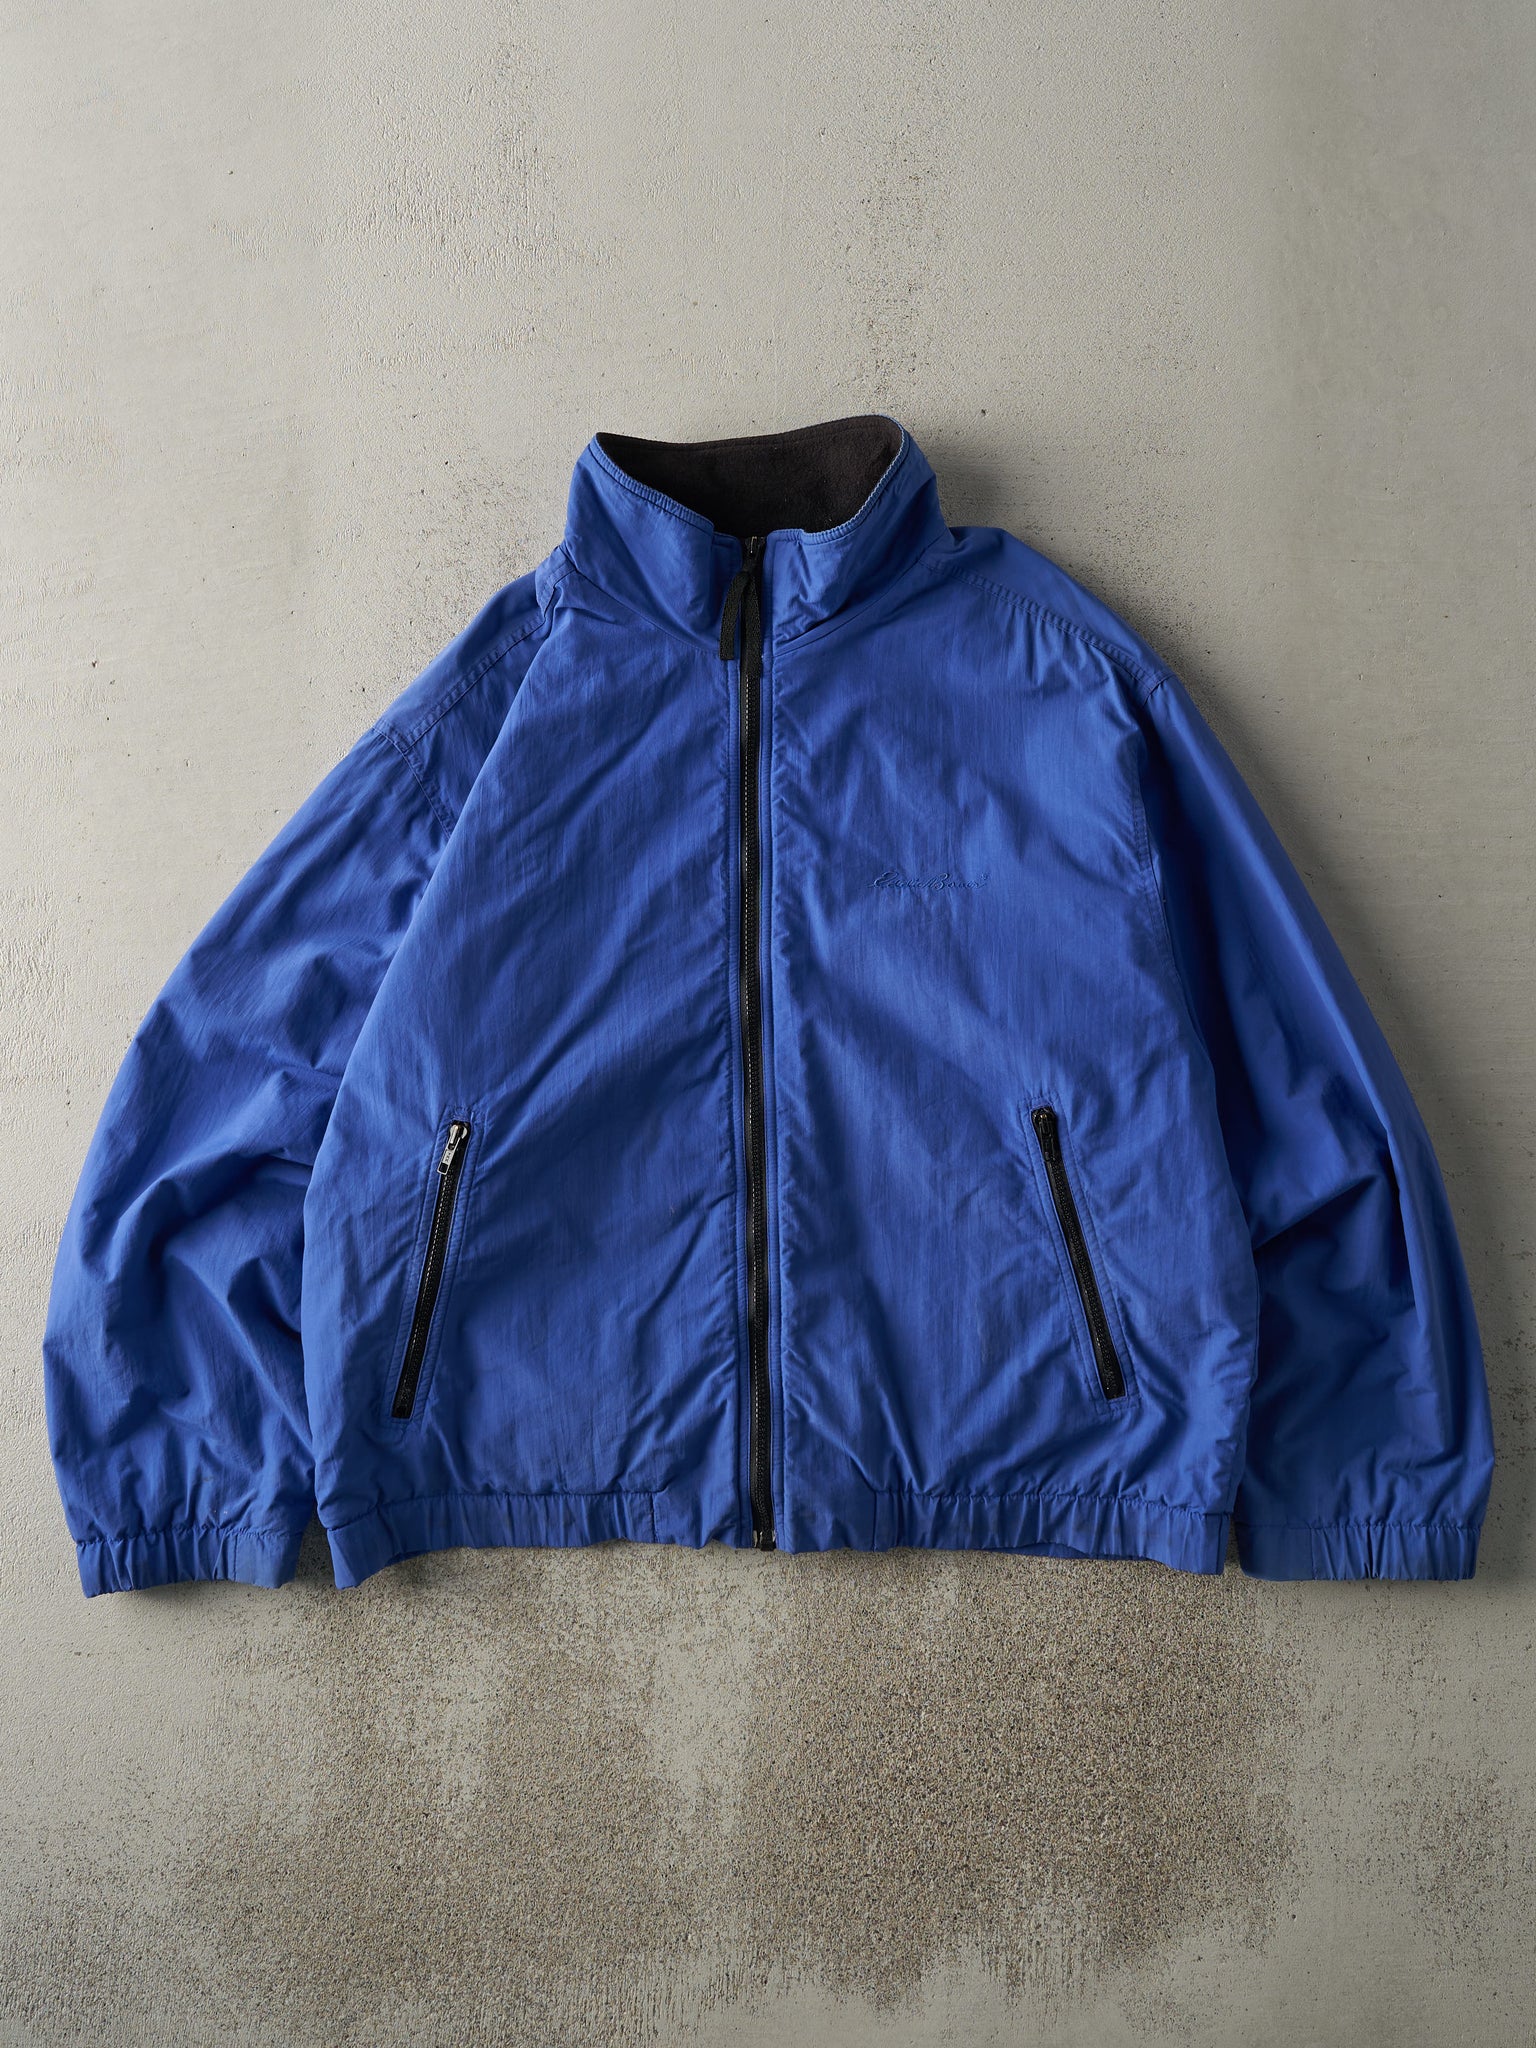 Vintage 90s Blue Embroidered Eddie Bauer Fleece Lined Jacket (L/XL)